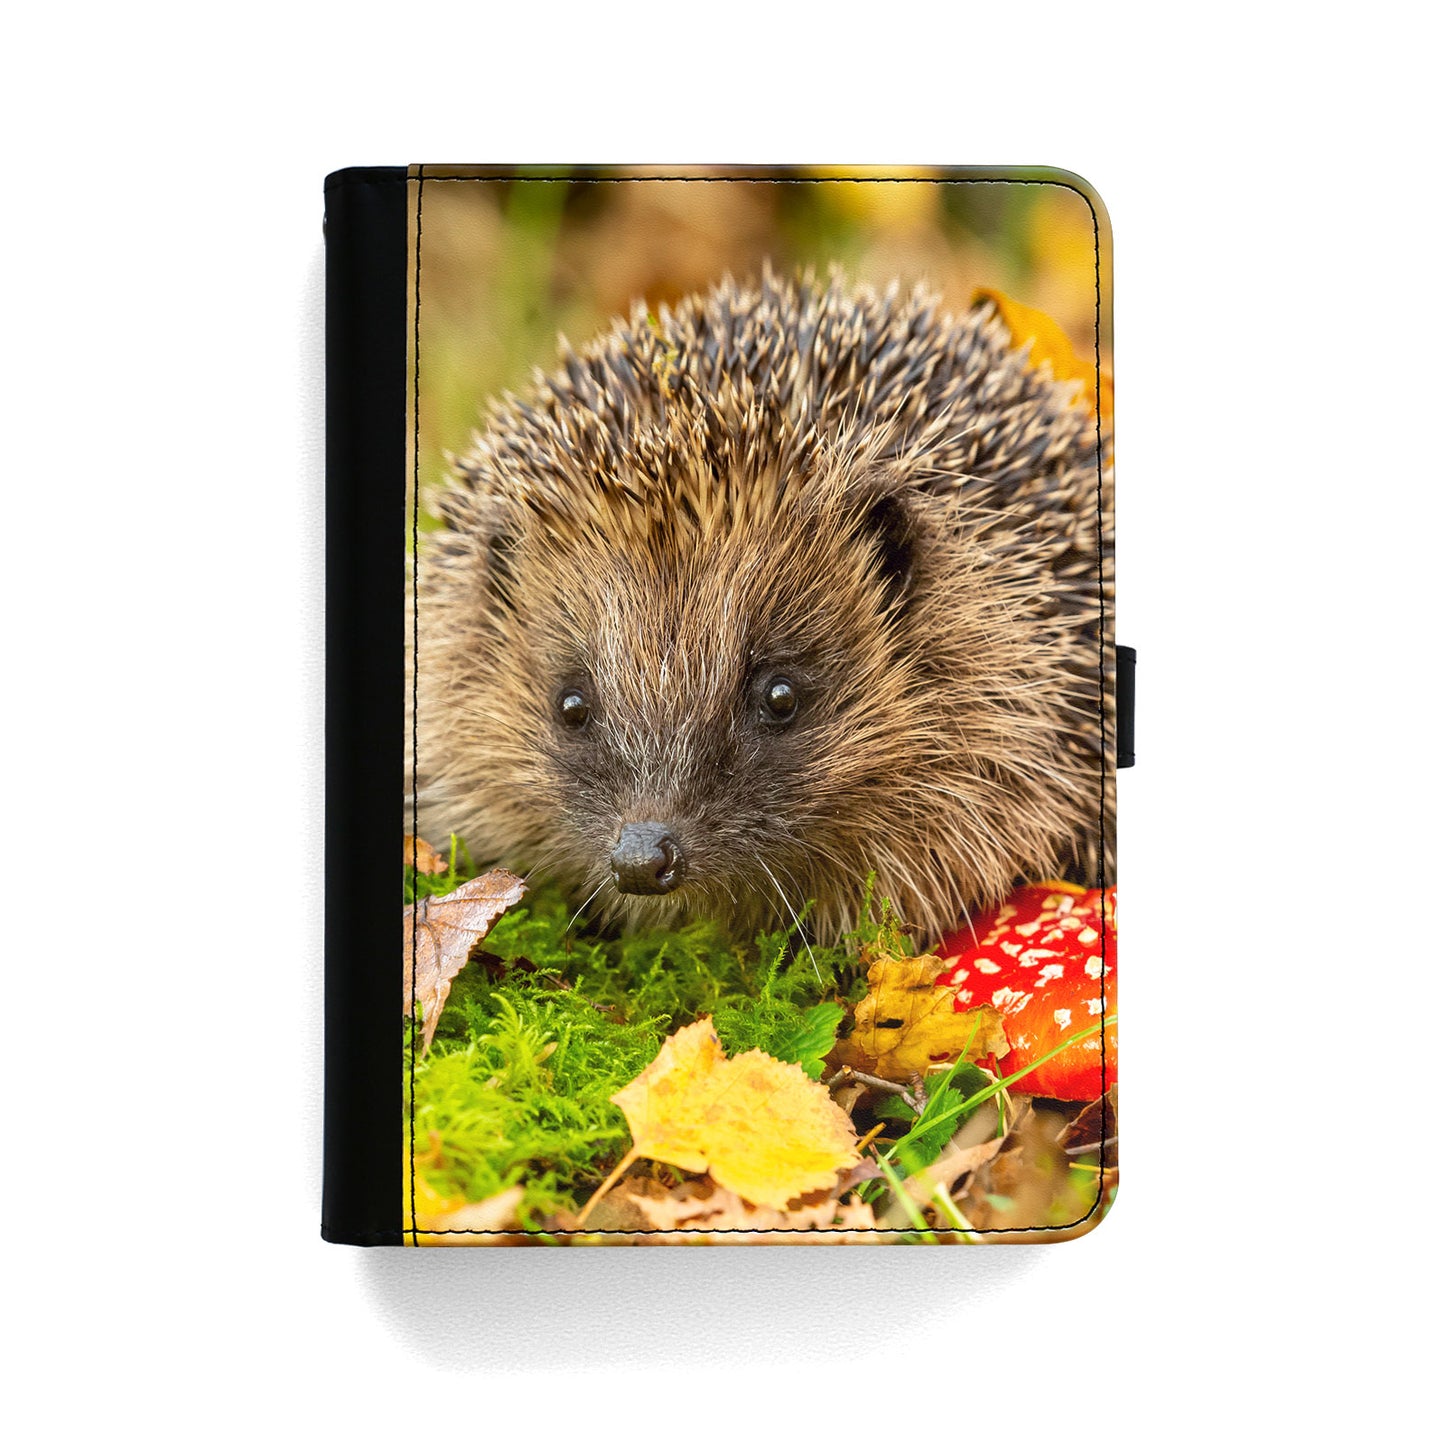 Hedgehog iPad Case - Leafy Hedgehog